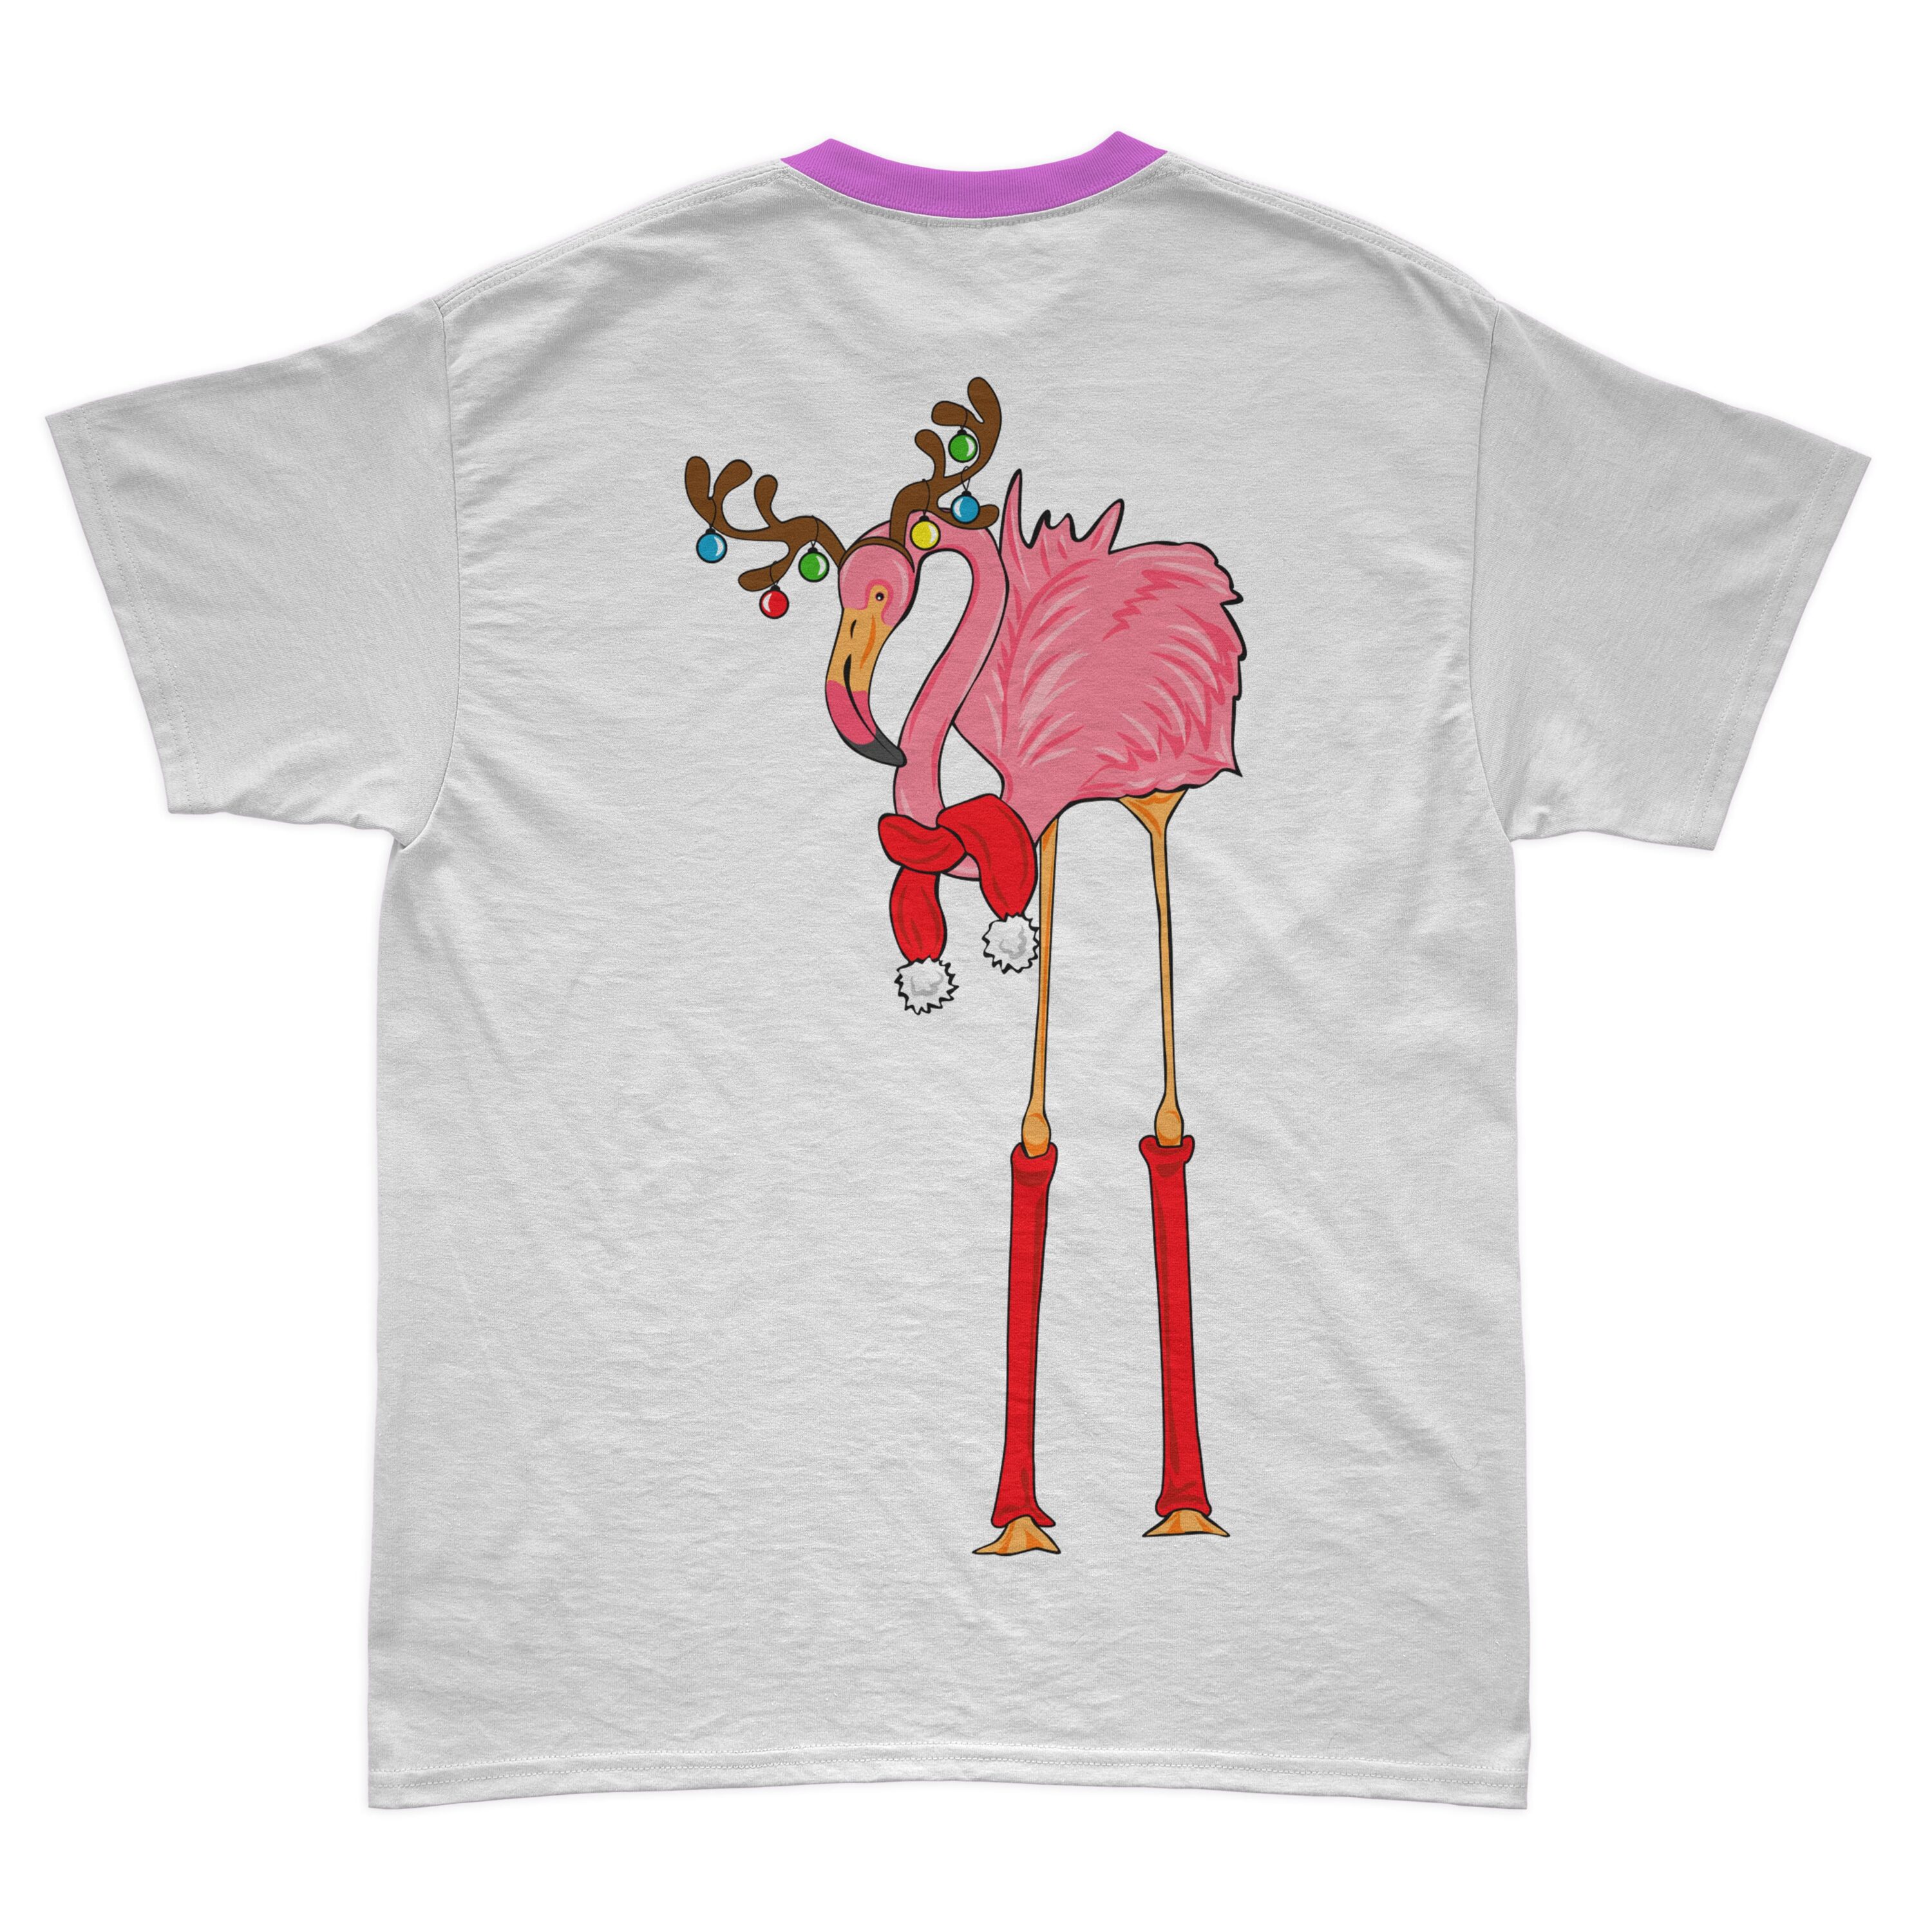 Funny Christmas flamingo on the white t-shirt.